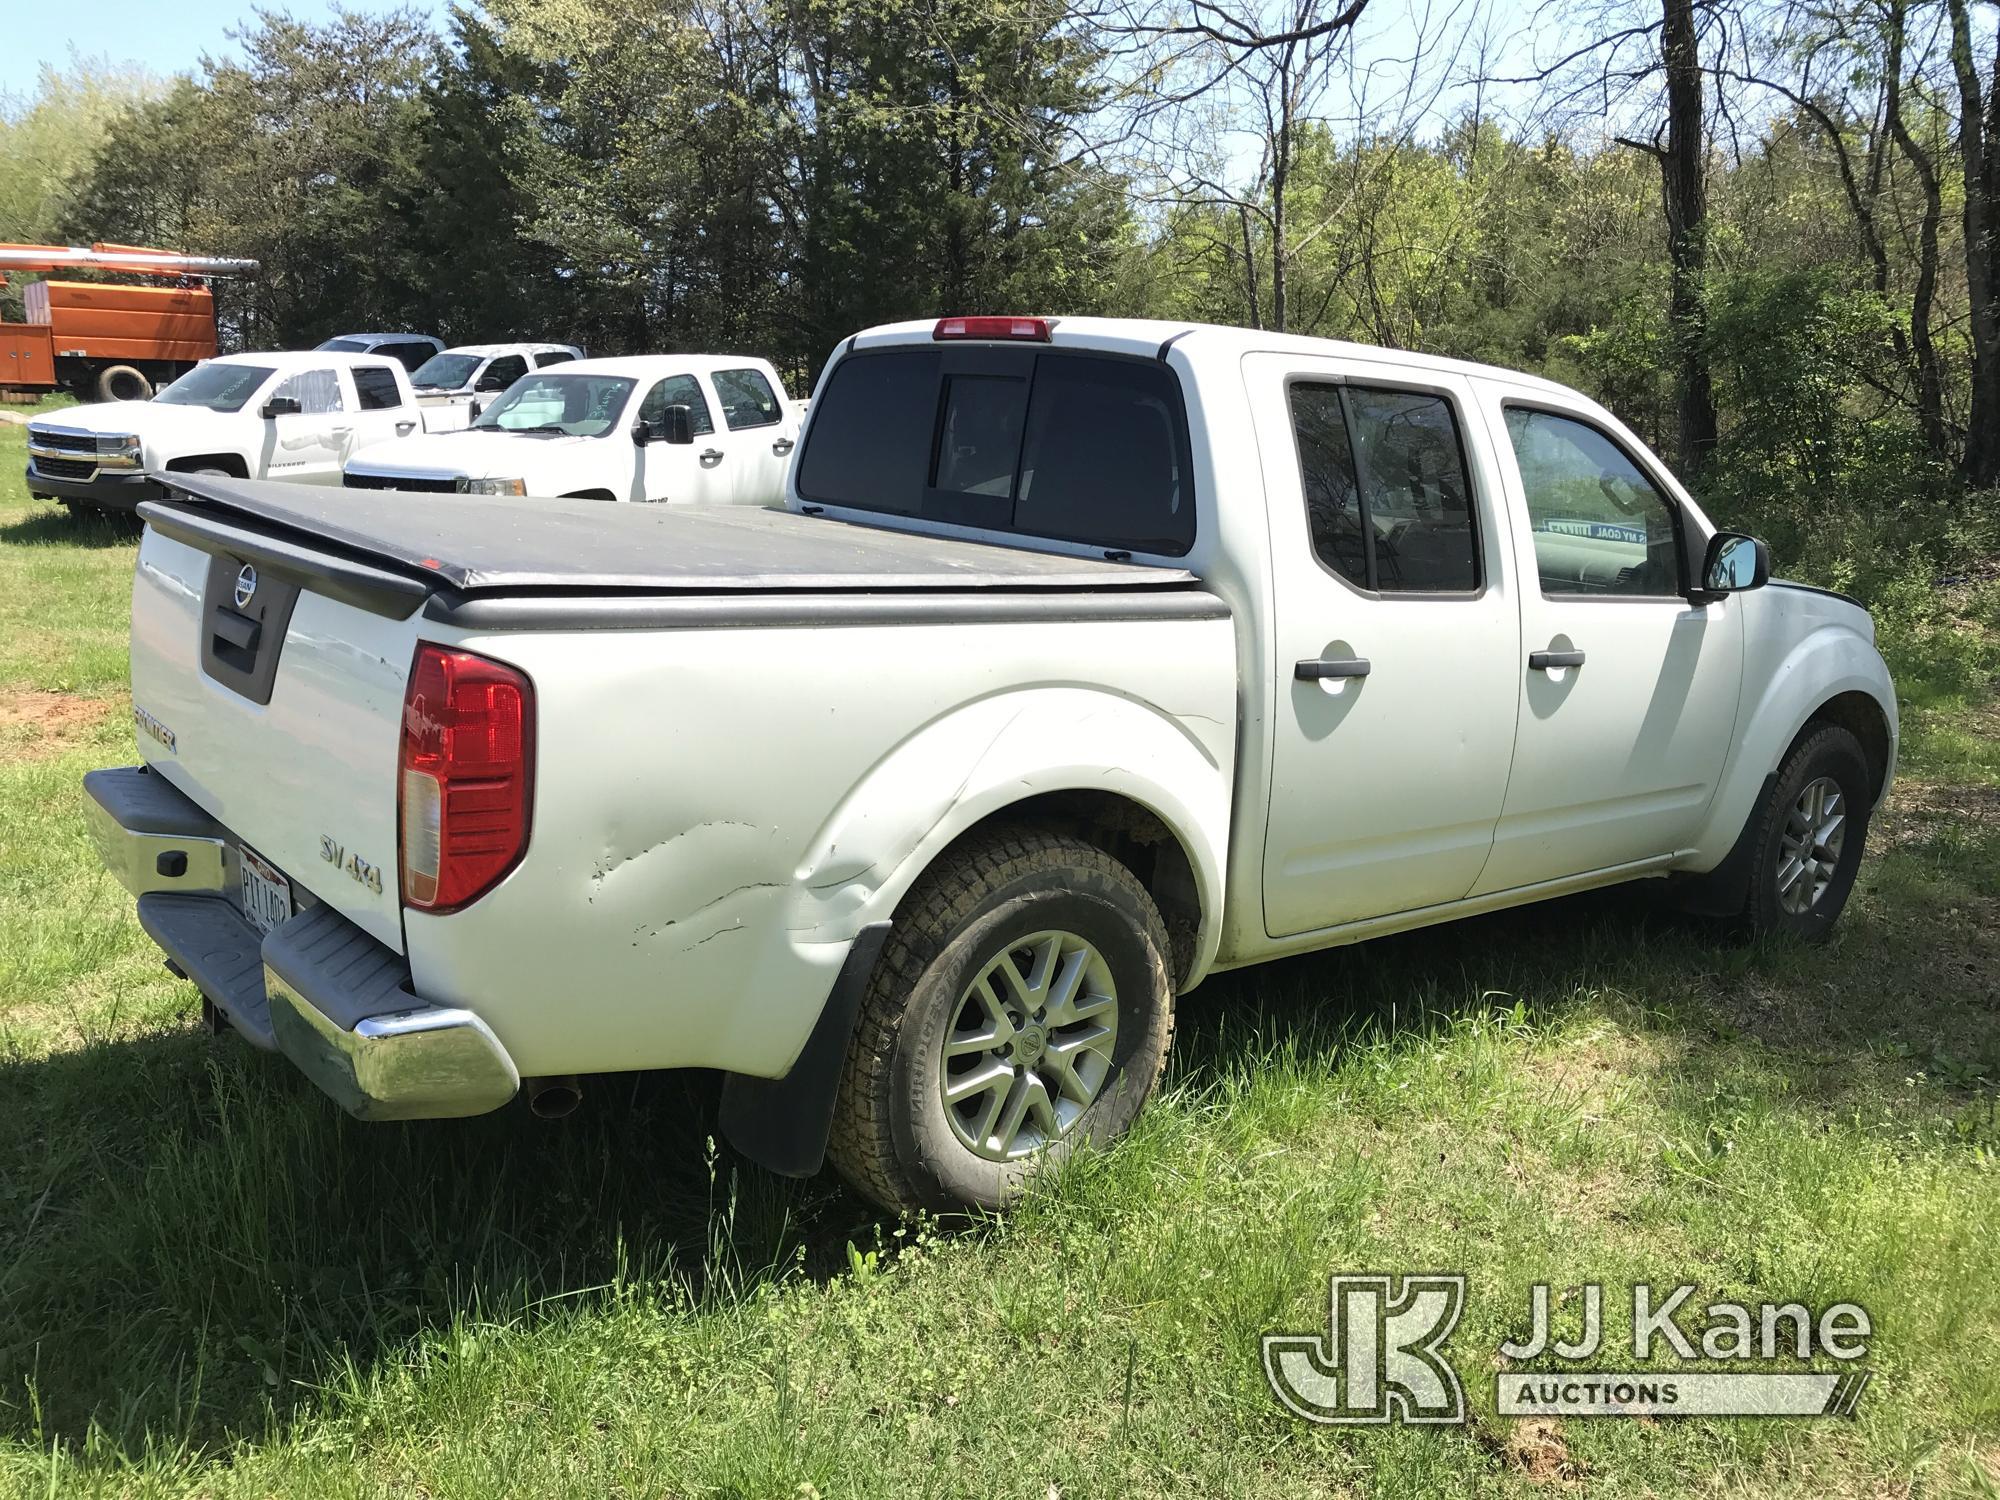 (Kodak, TN) 2015 Nissan Frontier 4x4 Crew-Cab Pickup Truck Not Running & Condition Unknown) (Cracked